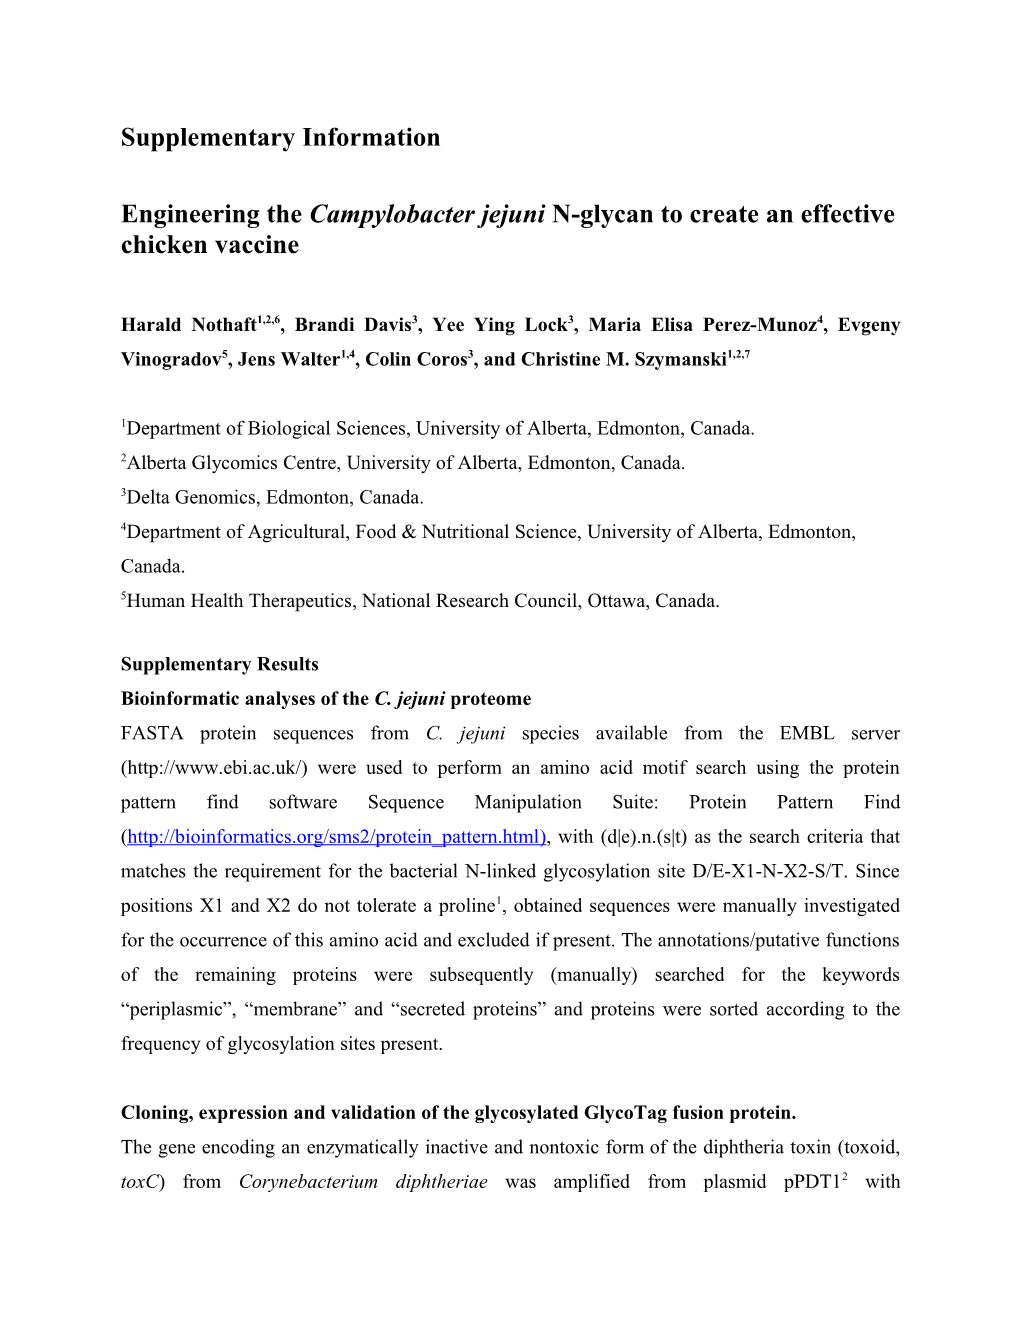 Engineering the Campylobacter Jejunin-Glycan to Create an Effective Chicken Vaccine